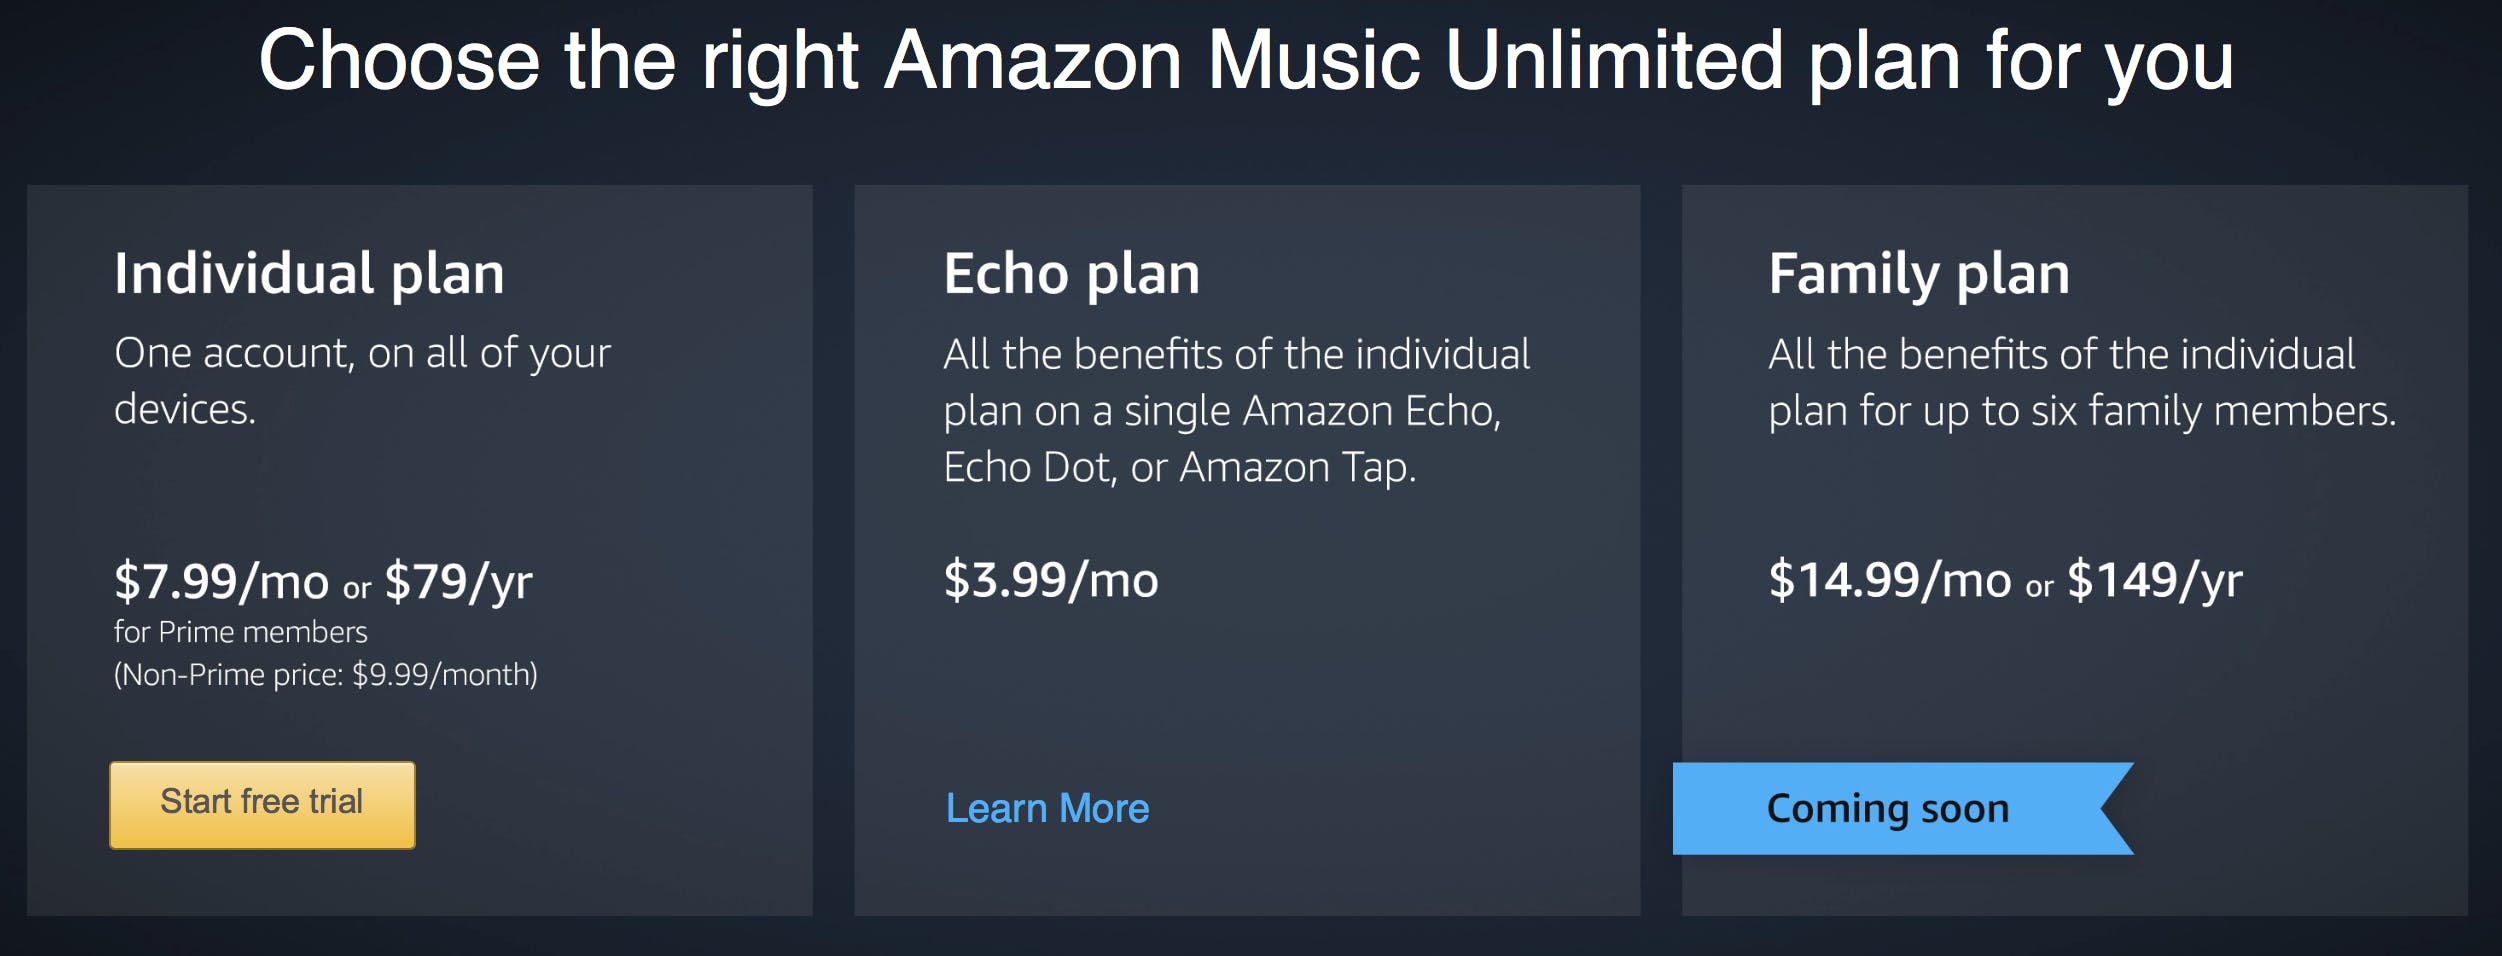 Amazon Music Unlimited media 2